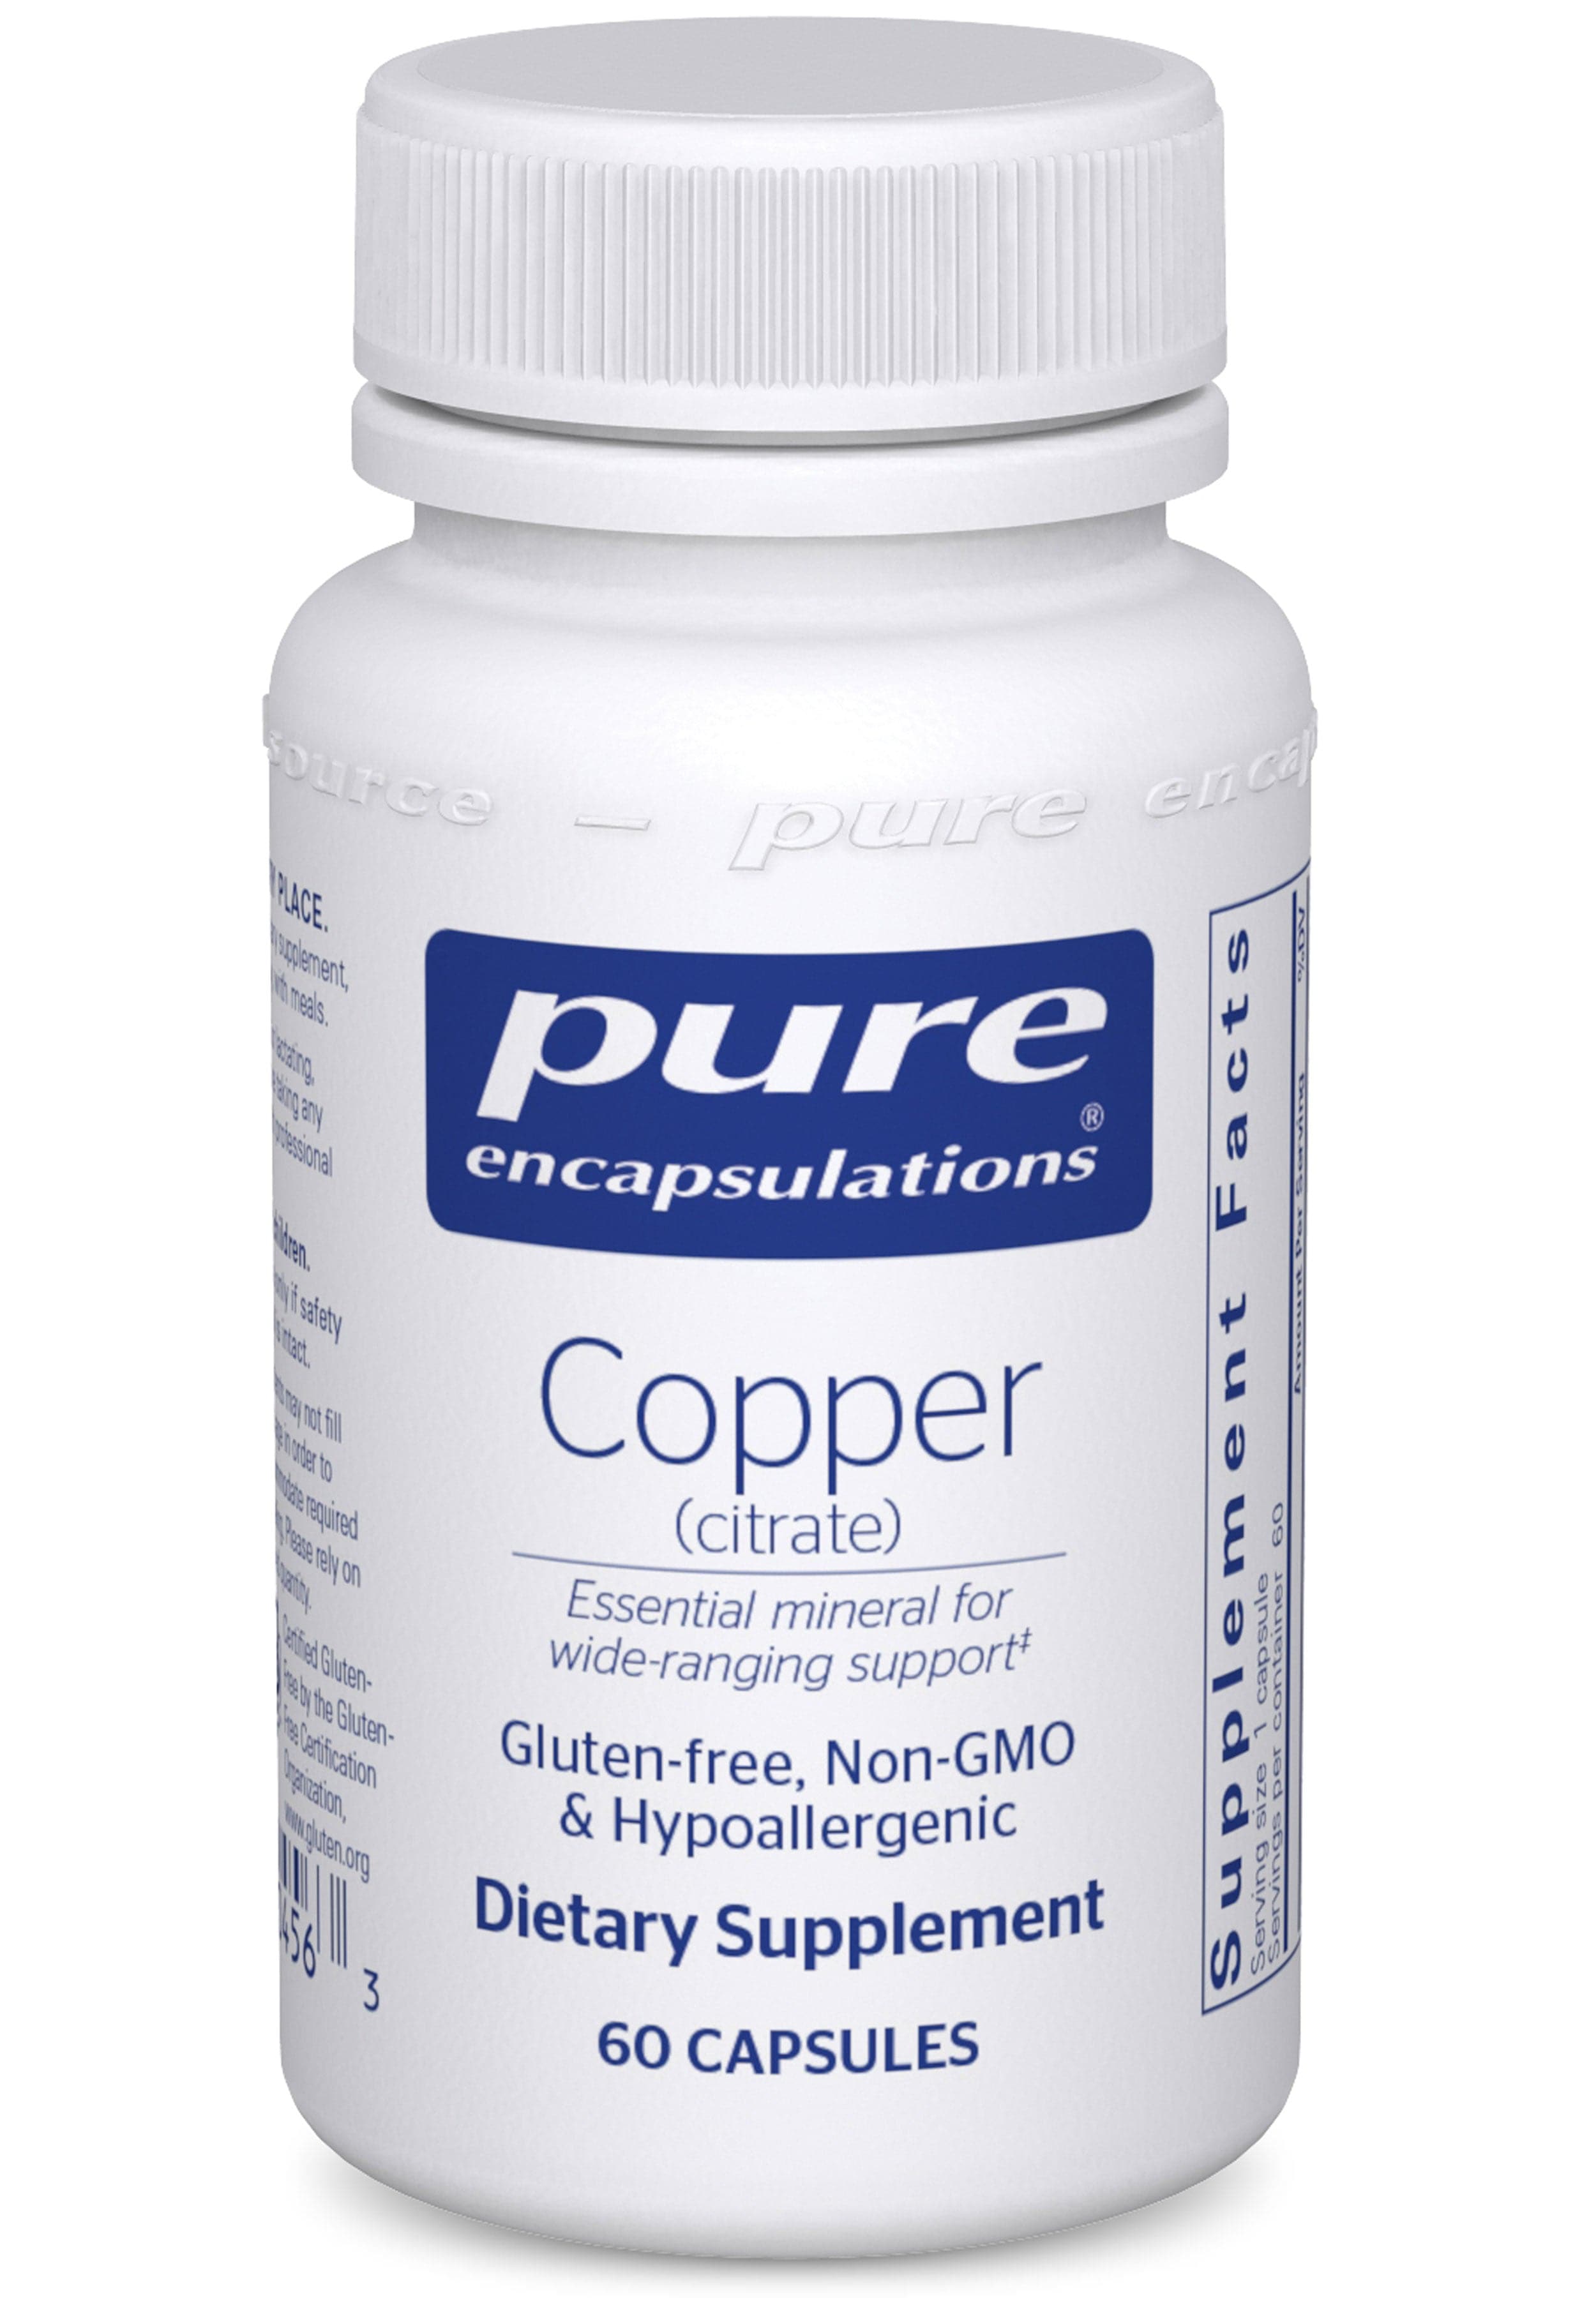 Pure Encapsulations Copper (citrate)